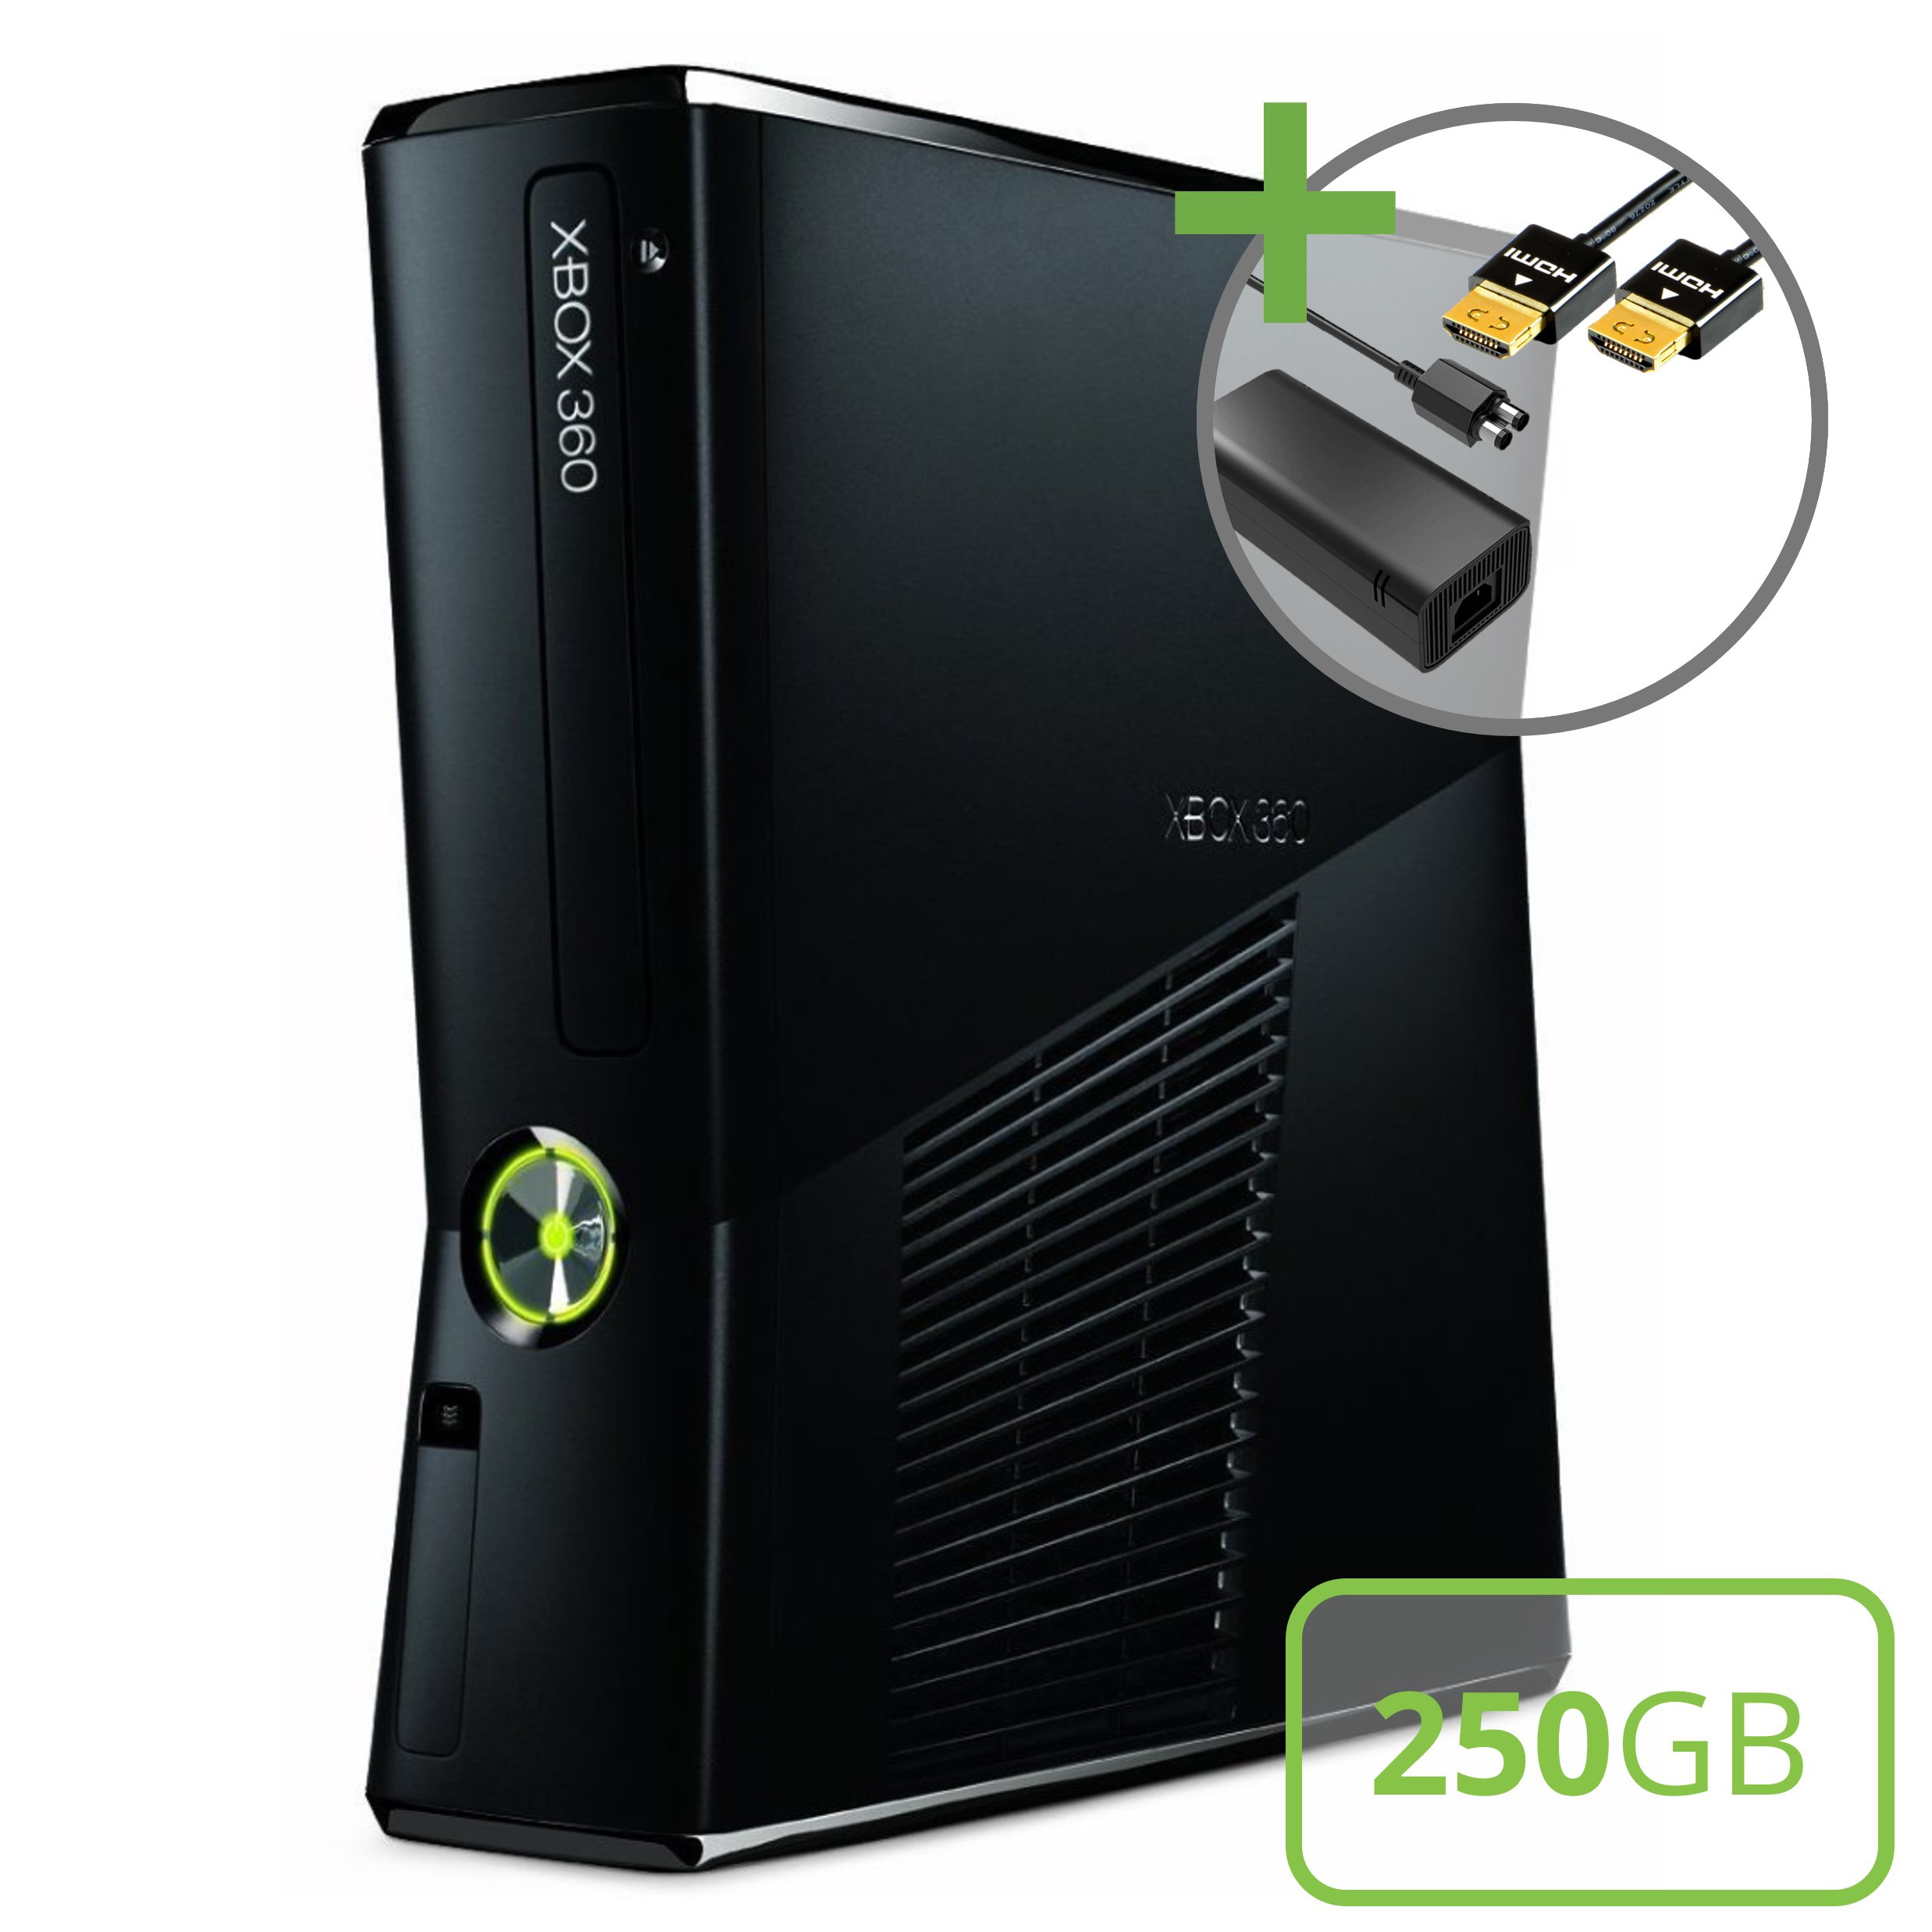 Xbox 360 Slim Console 250GB verkopen binnen 5 minuten.